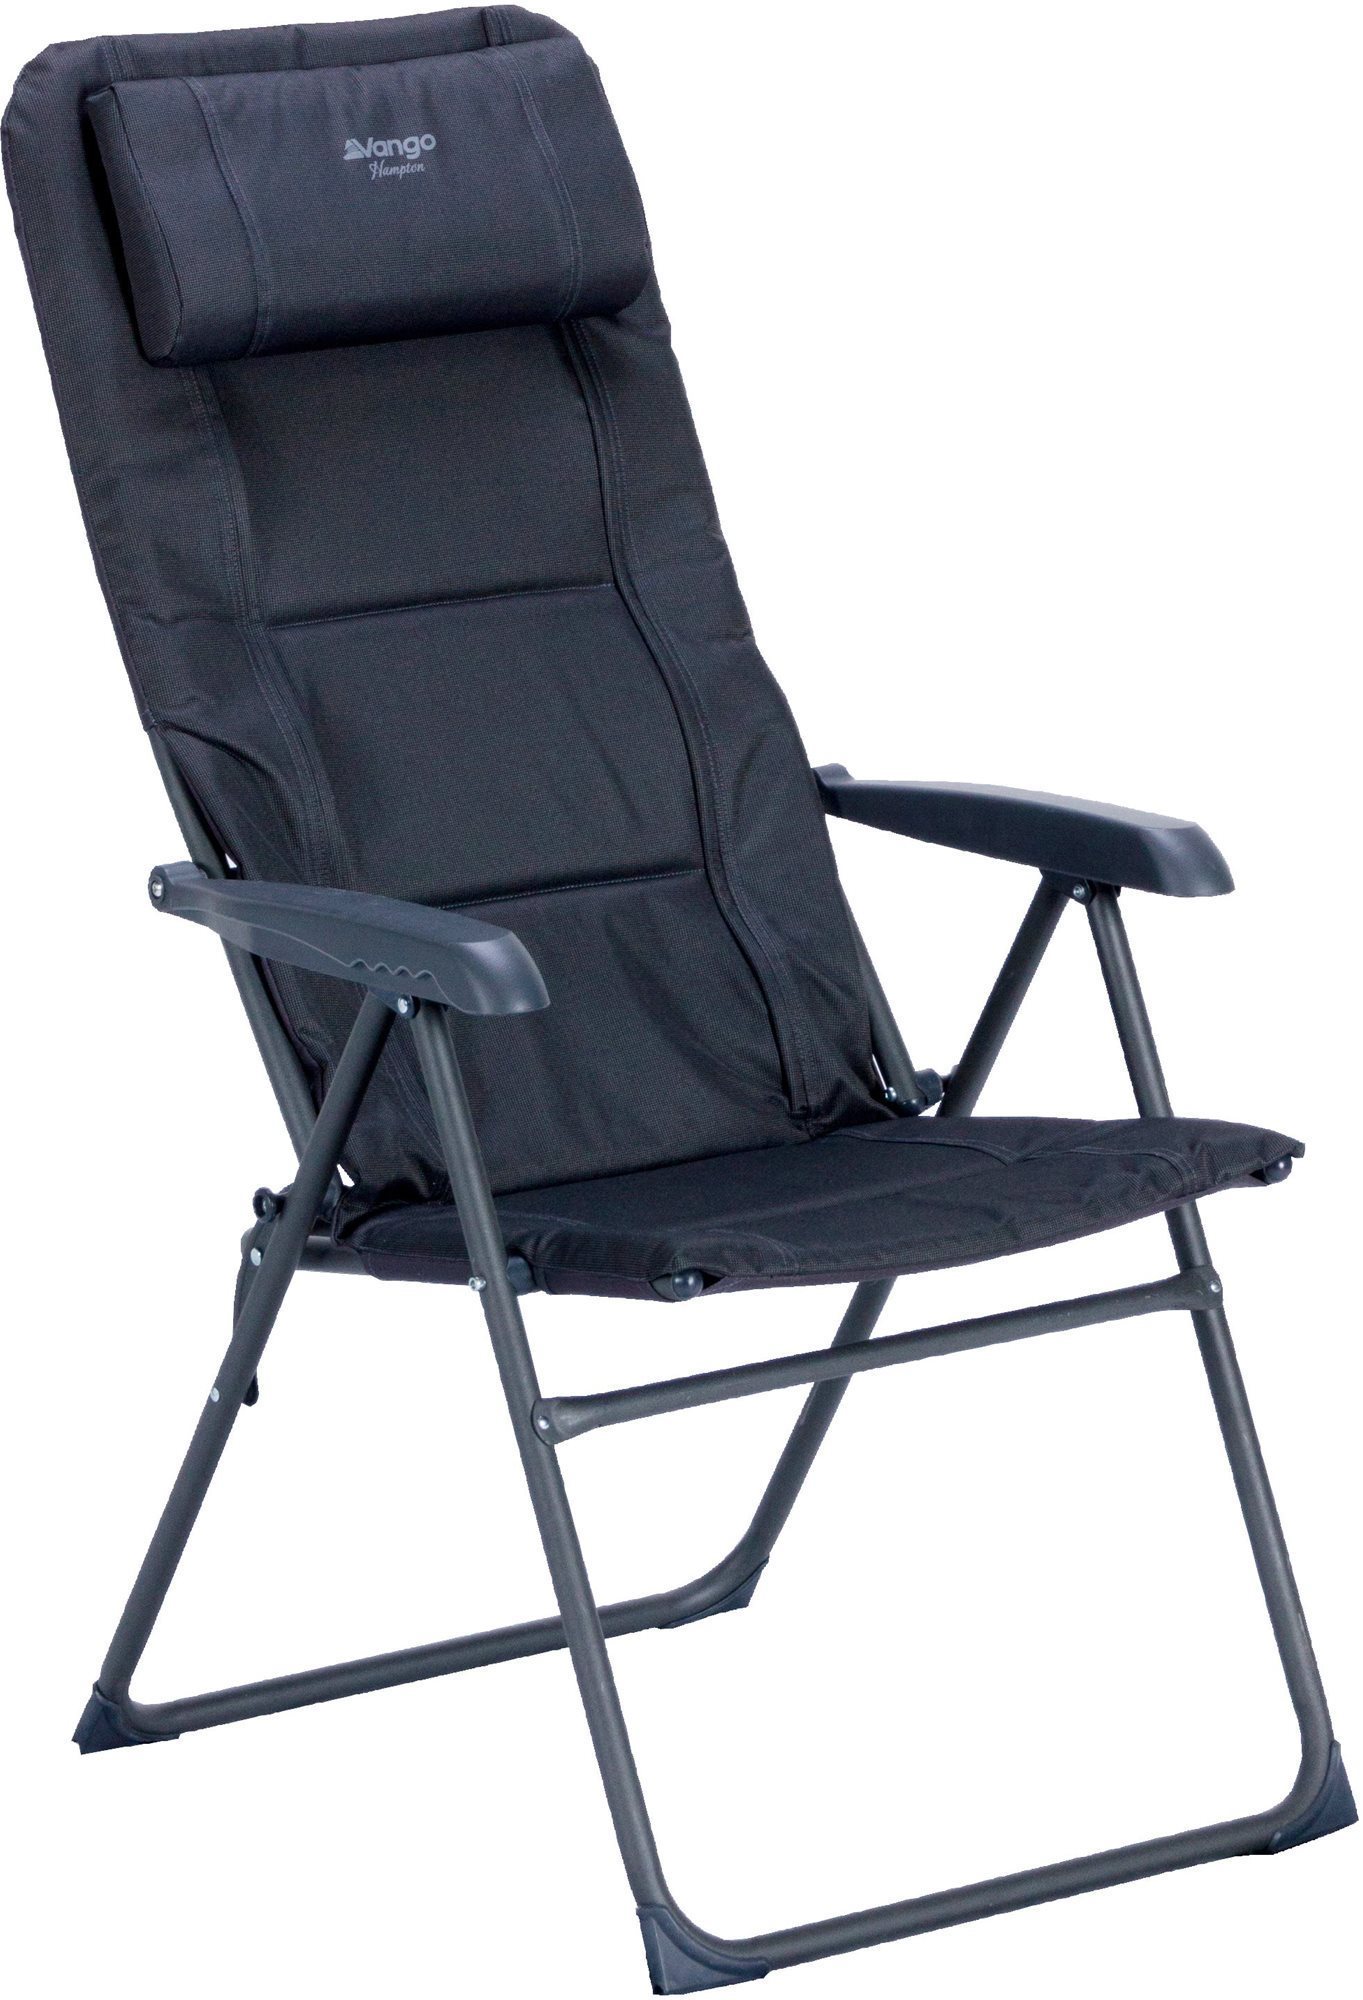 Vango Hampton Chair Excalibur Dlx